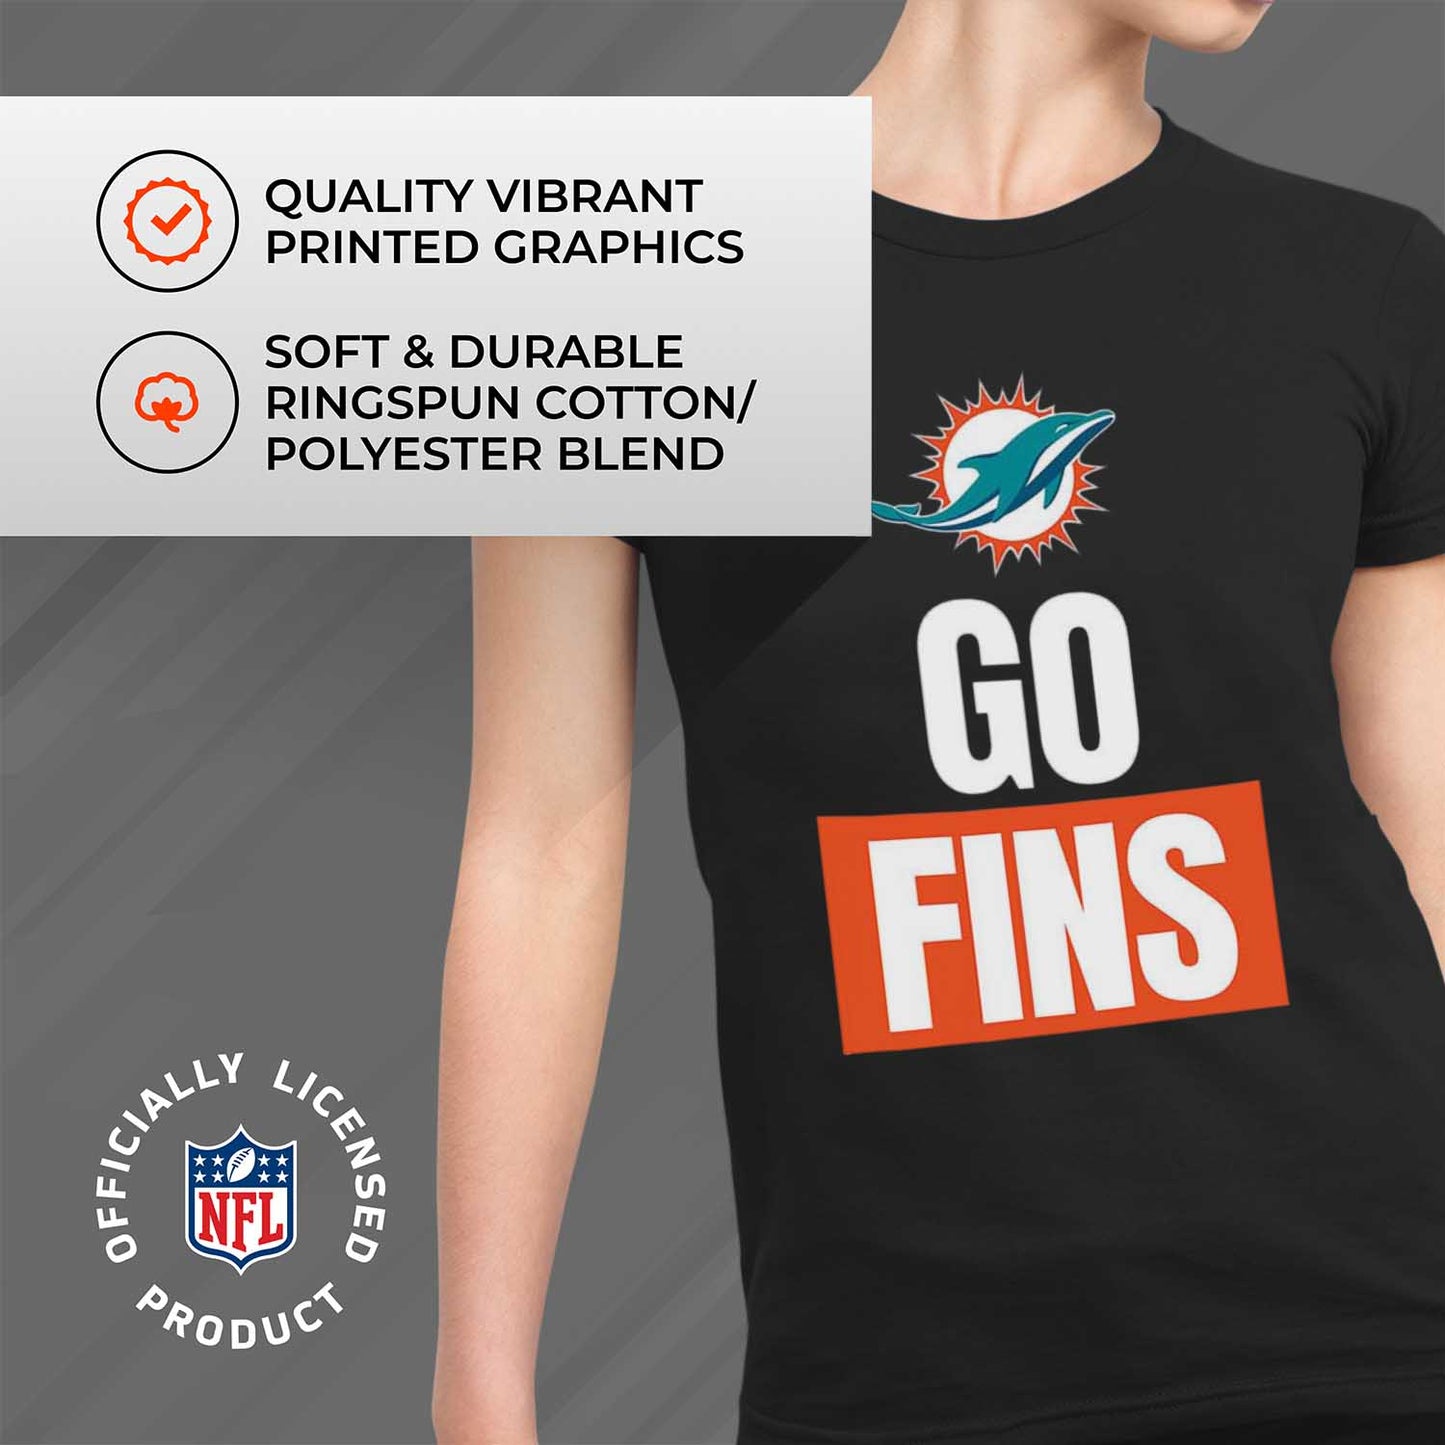 Miami Dolphins NFL Womens Plus Size Team Slogan Short Sleeve T-Shirt - Black